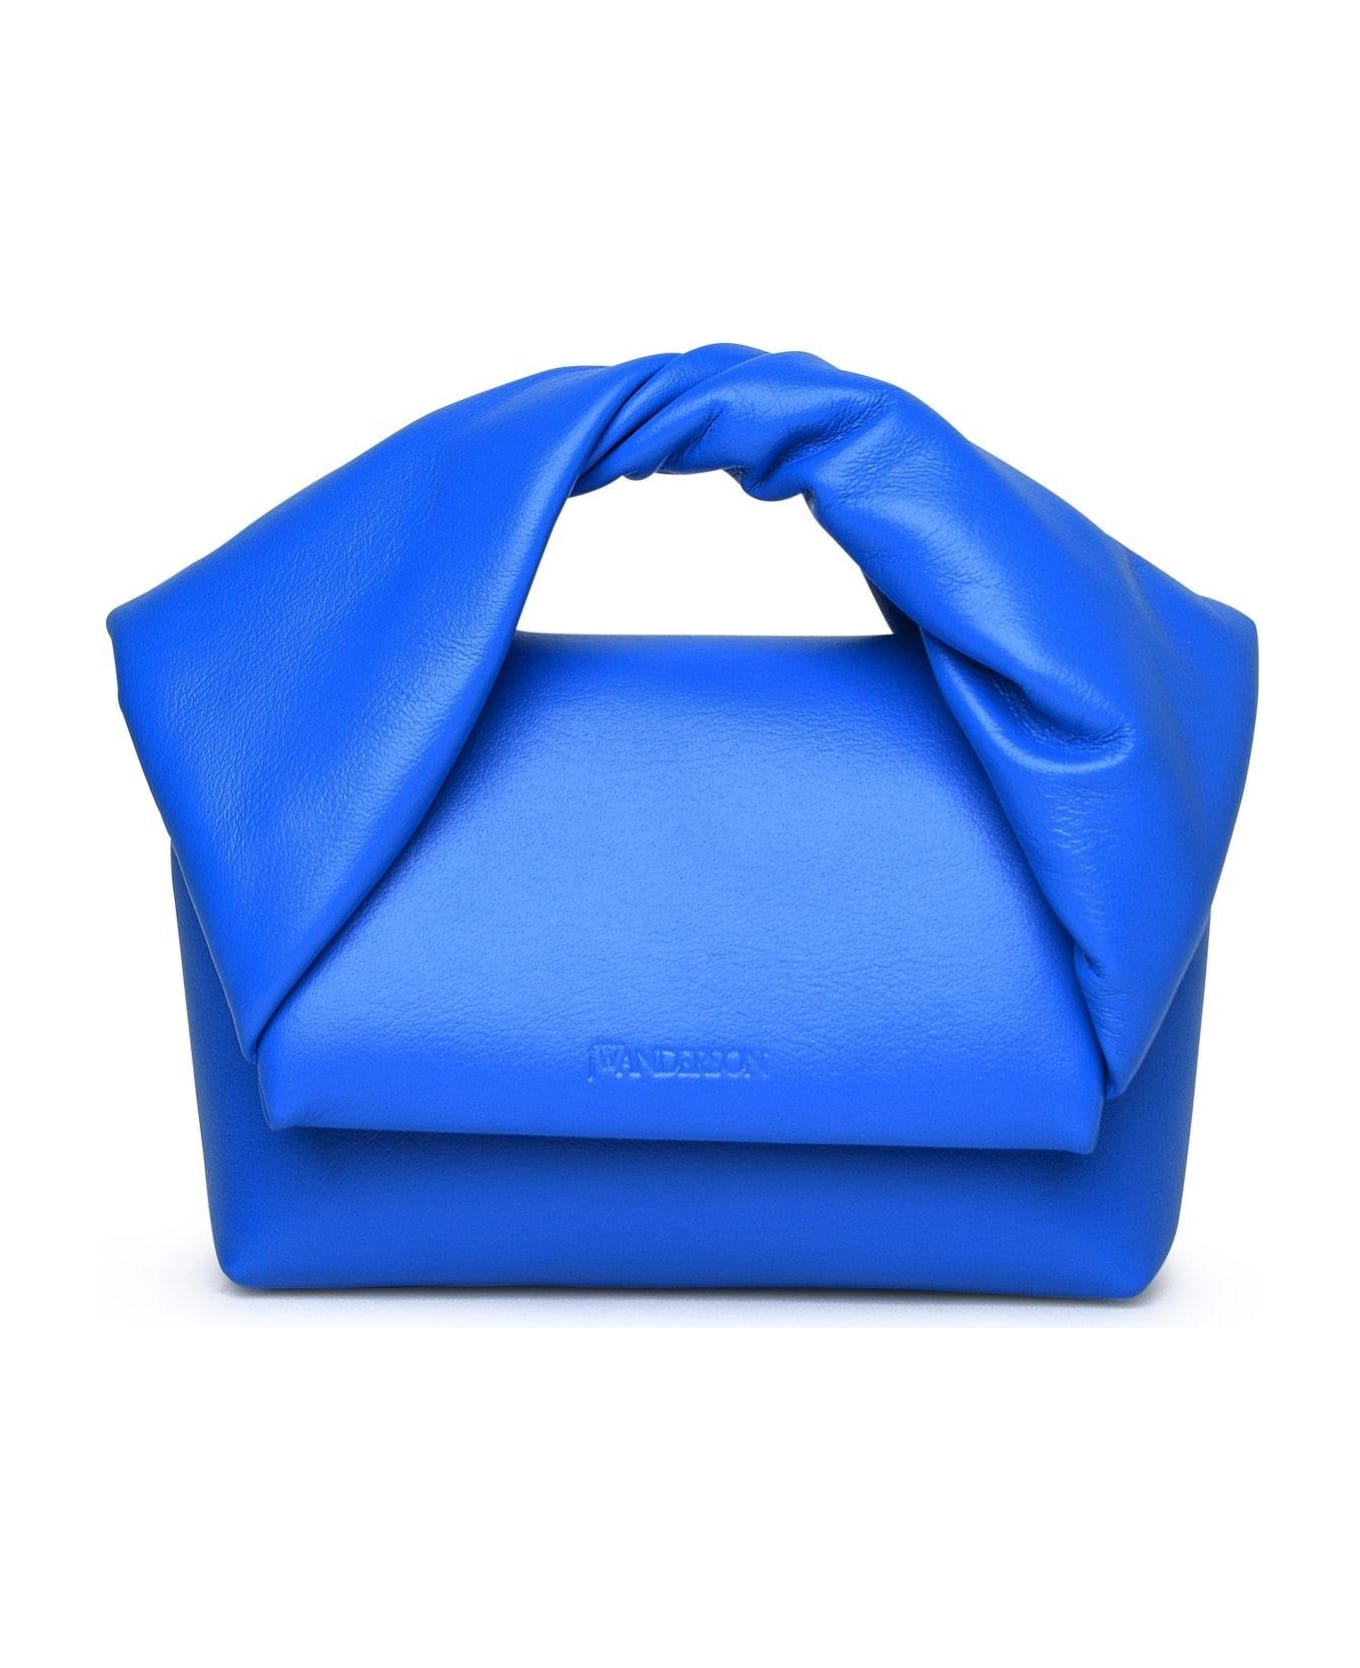 J.W. Anderson Small Twister Tote Bag - Blue